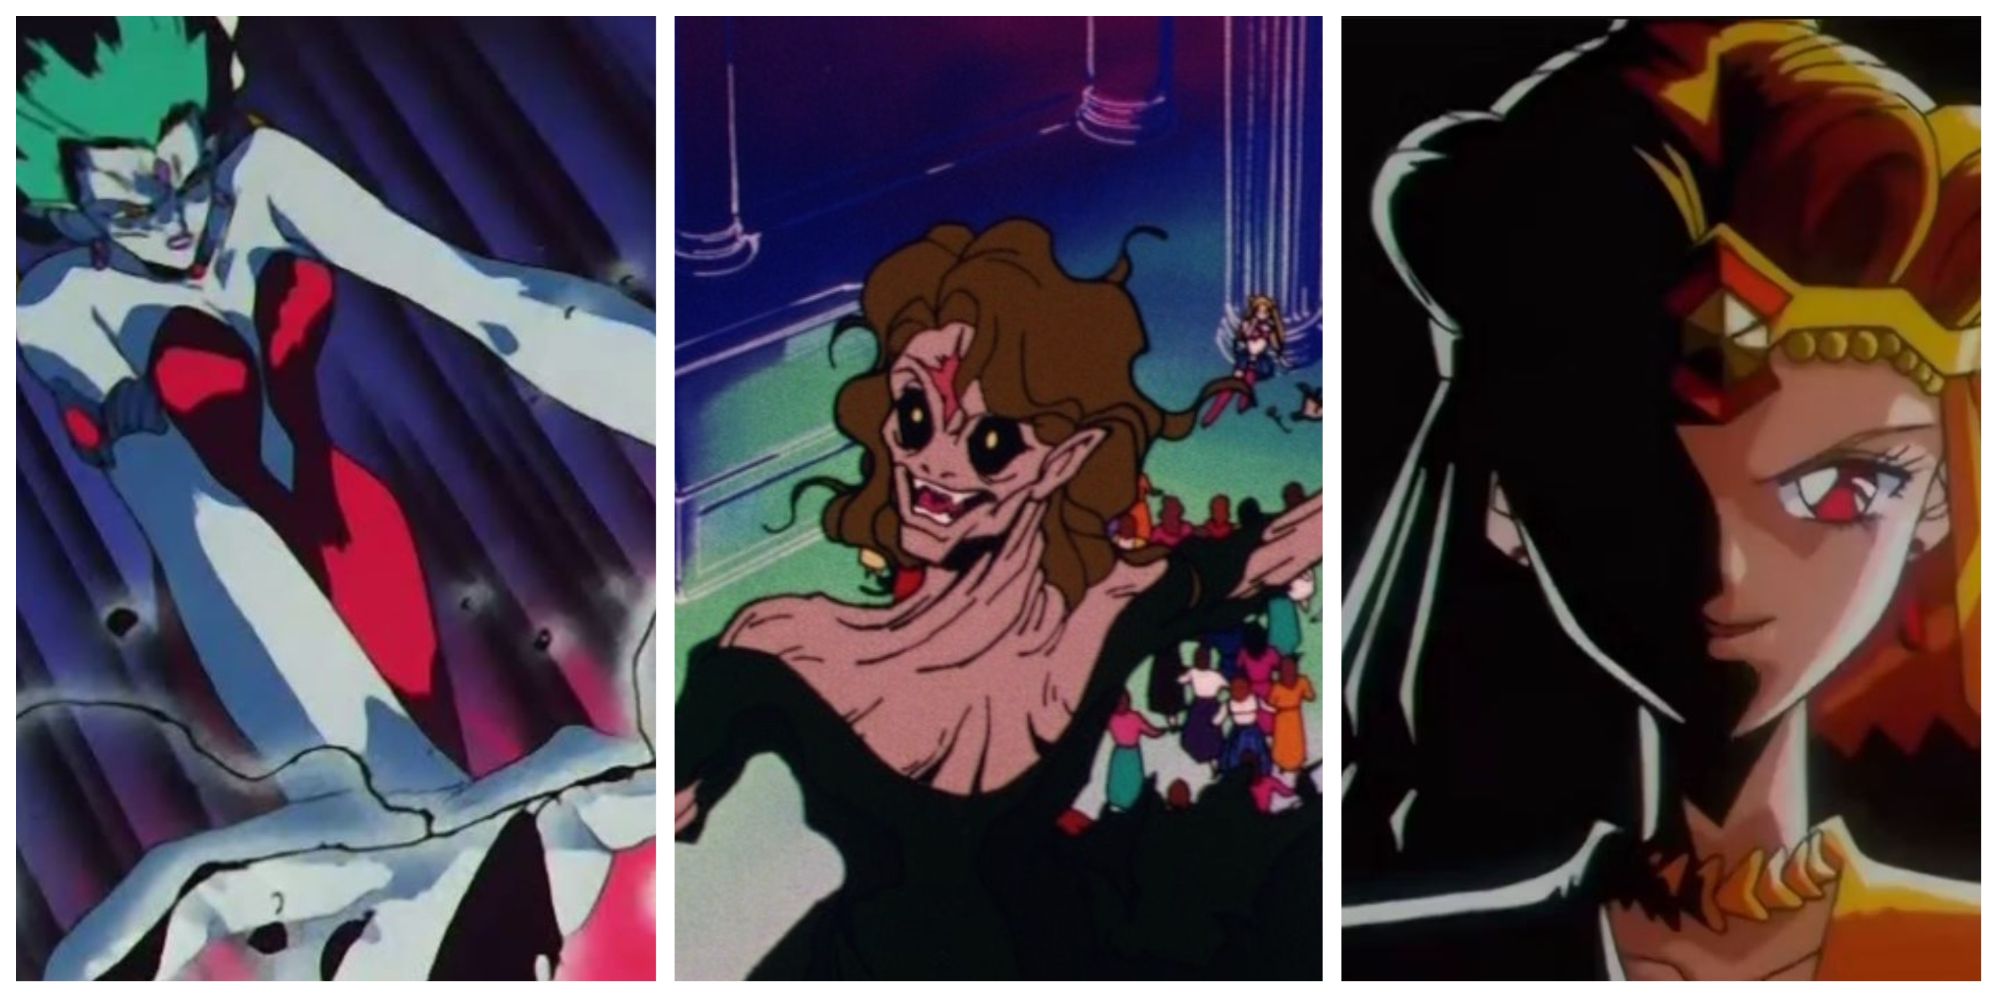 Dark Mercury aparece no anime de Sailor Moon? - Quora